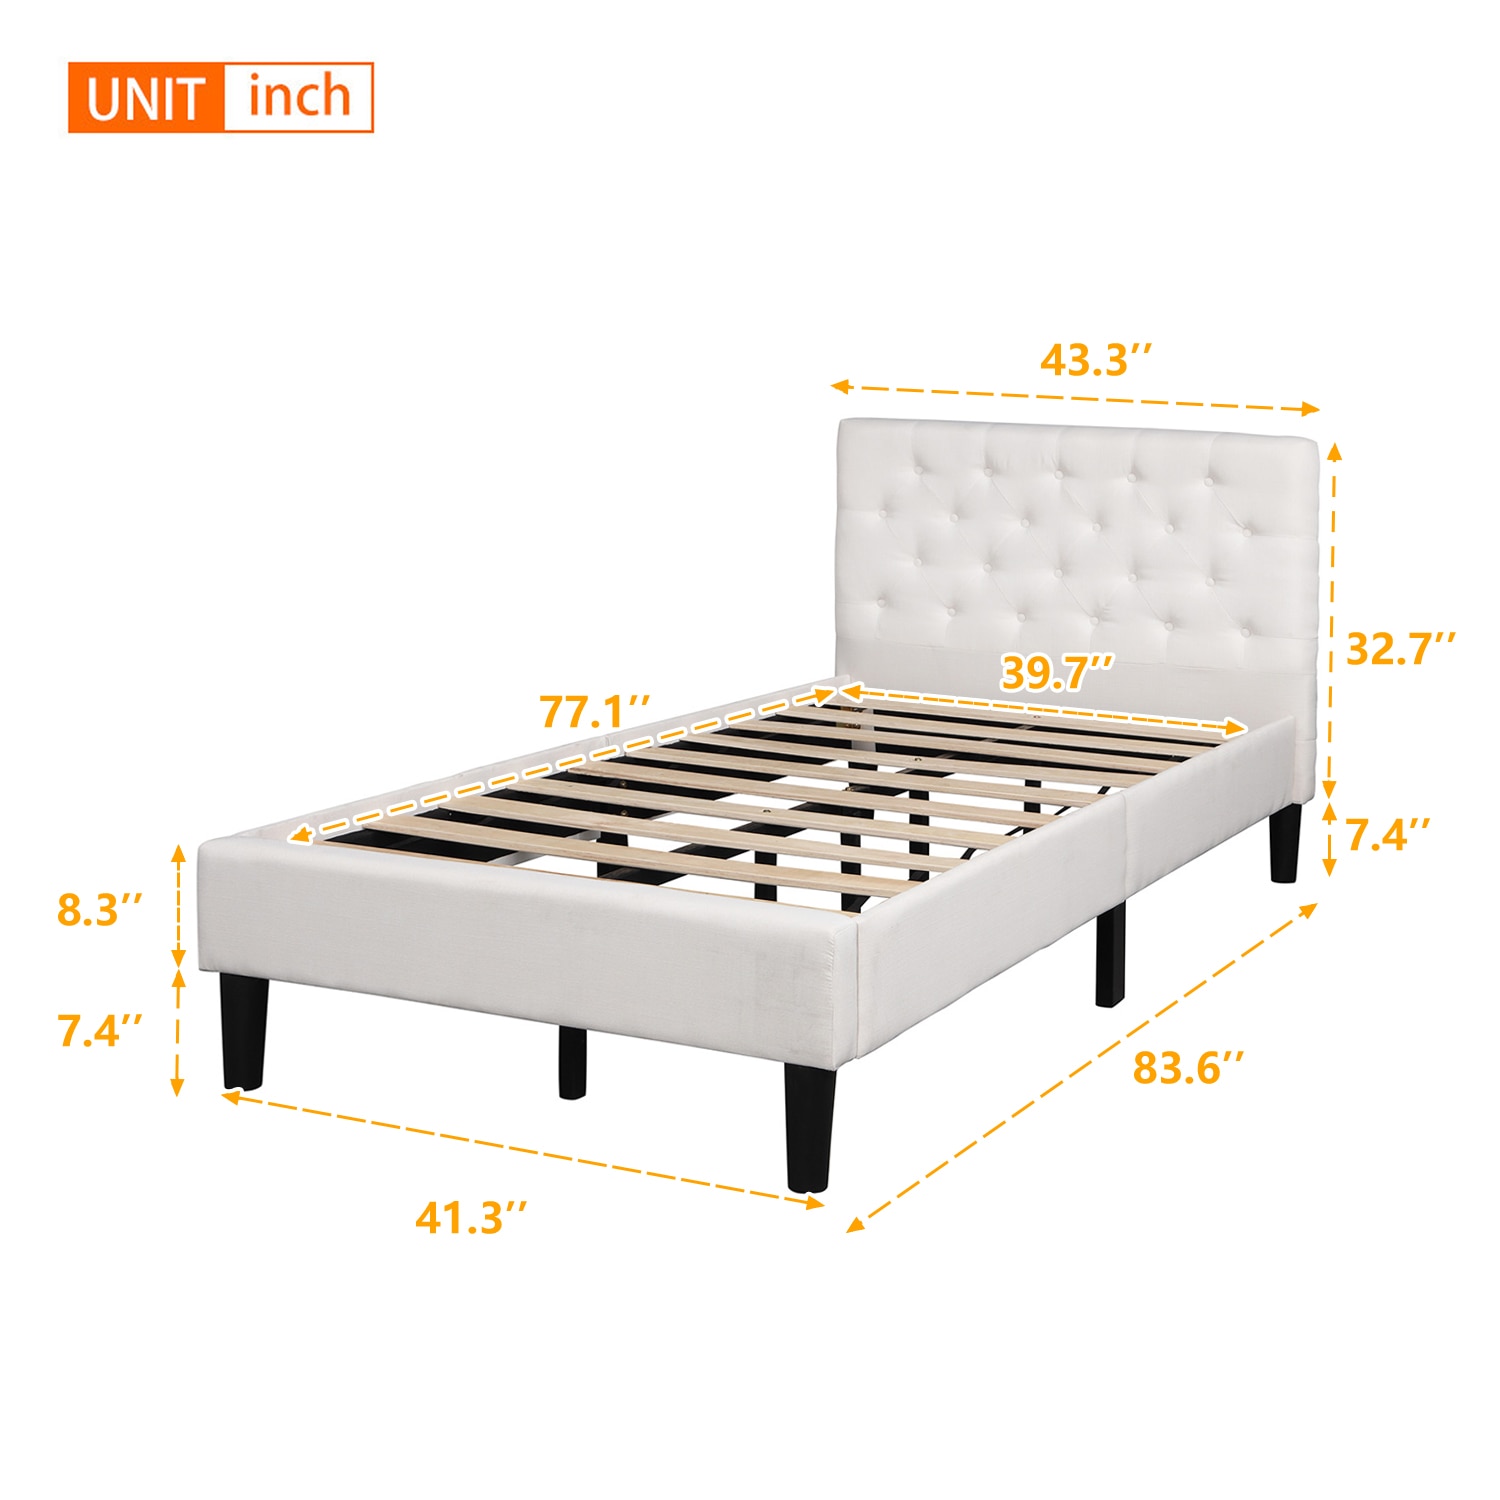 Upholstered Linen Platform Bed Twin Size Bedroom Furniture In Stock for Bedroom US Warehouse